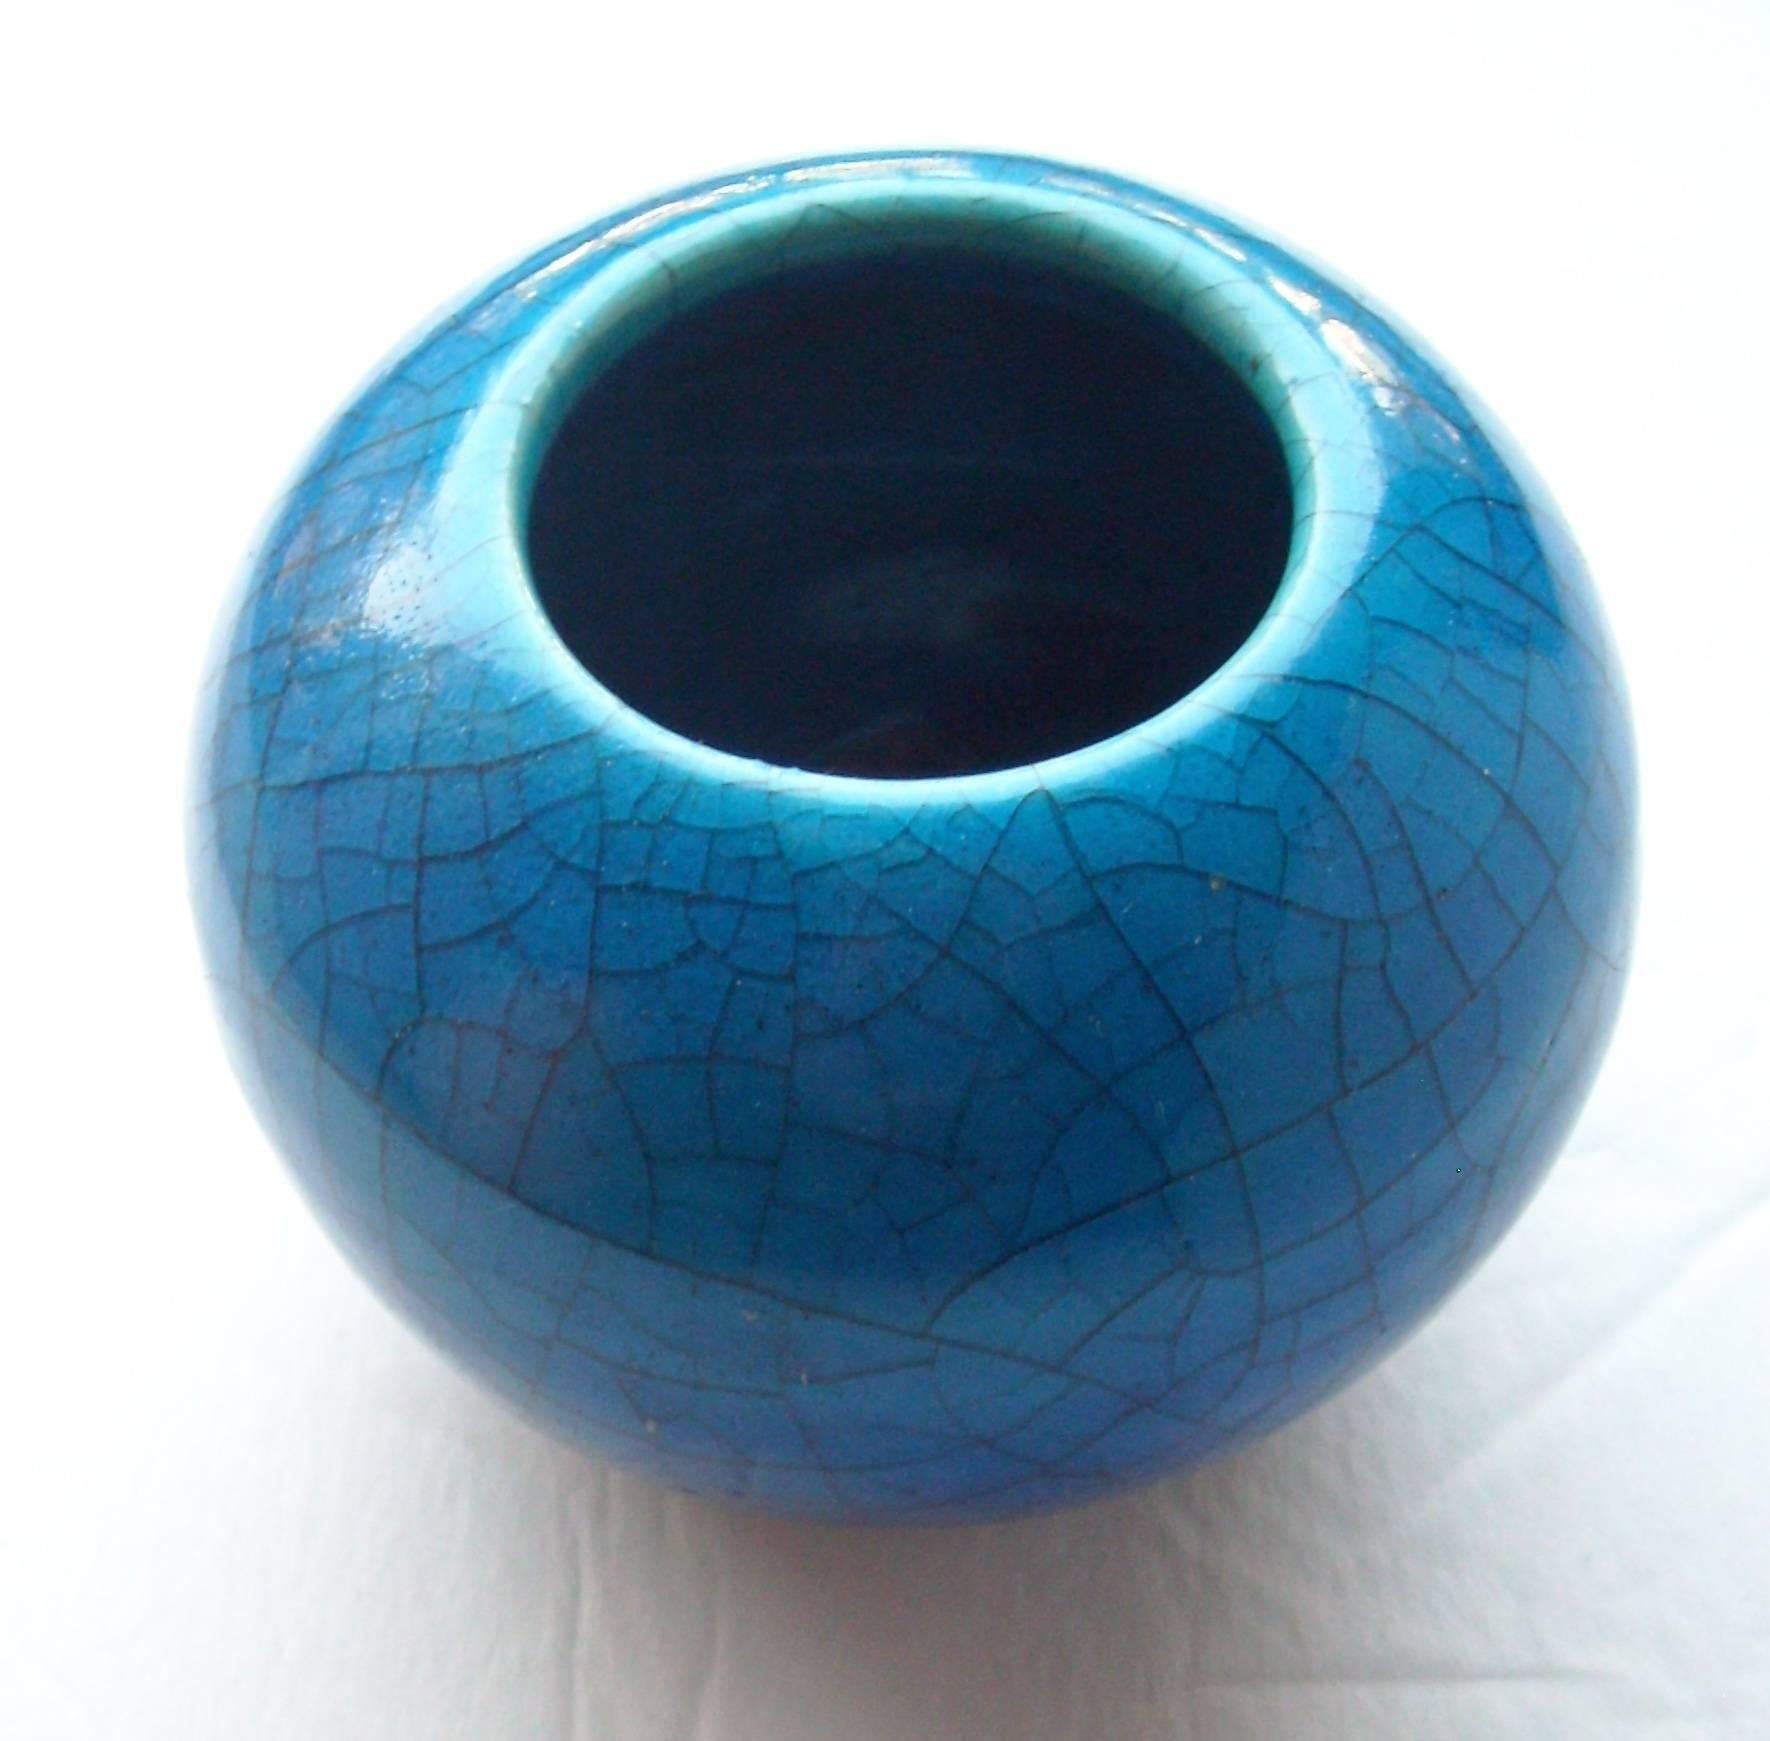 Nice blue glaze in this nice sample of Lukens work.